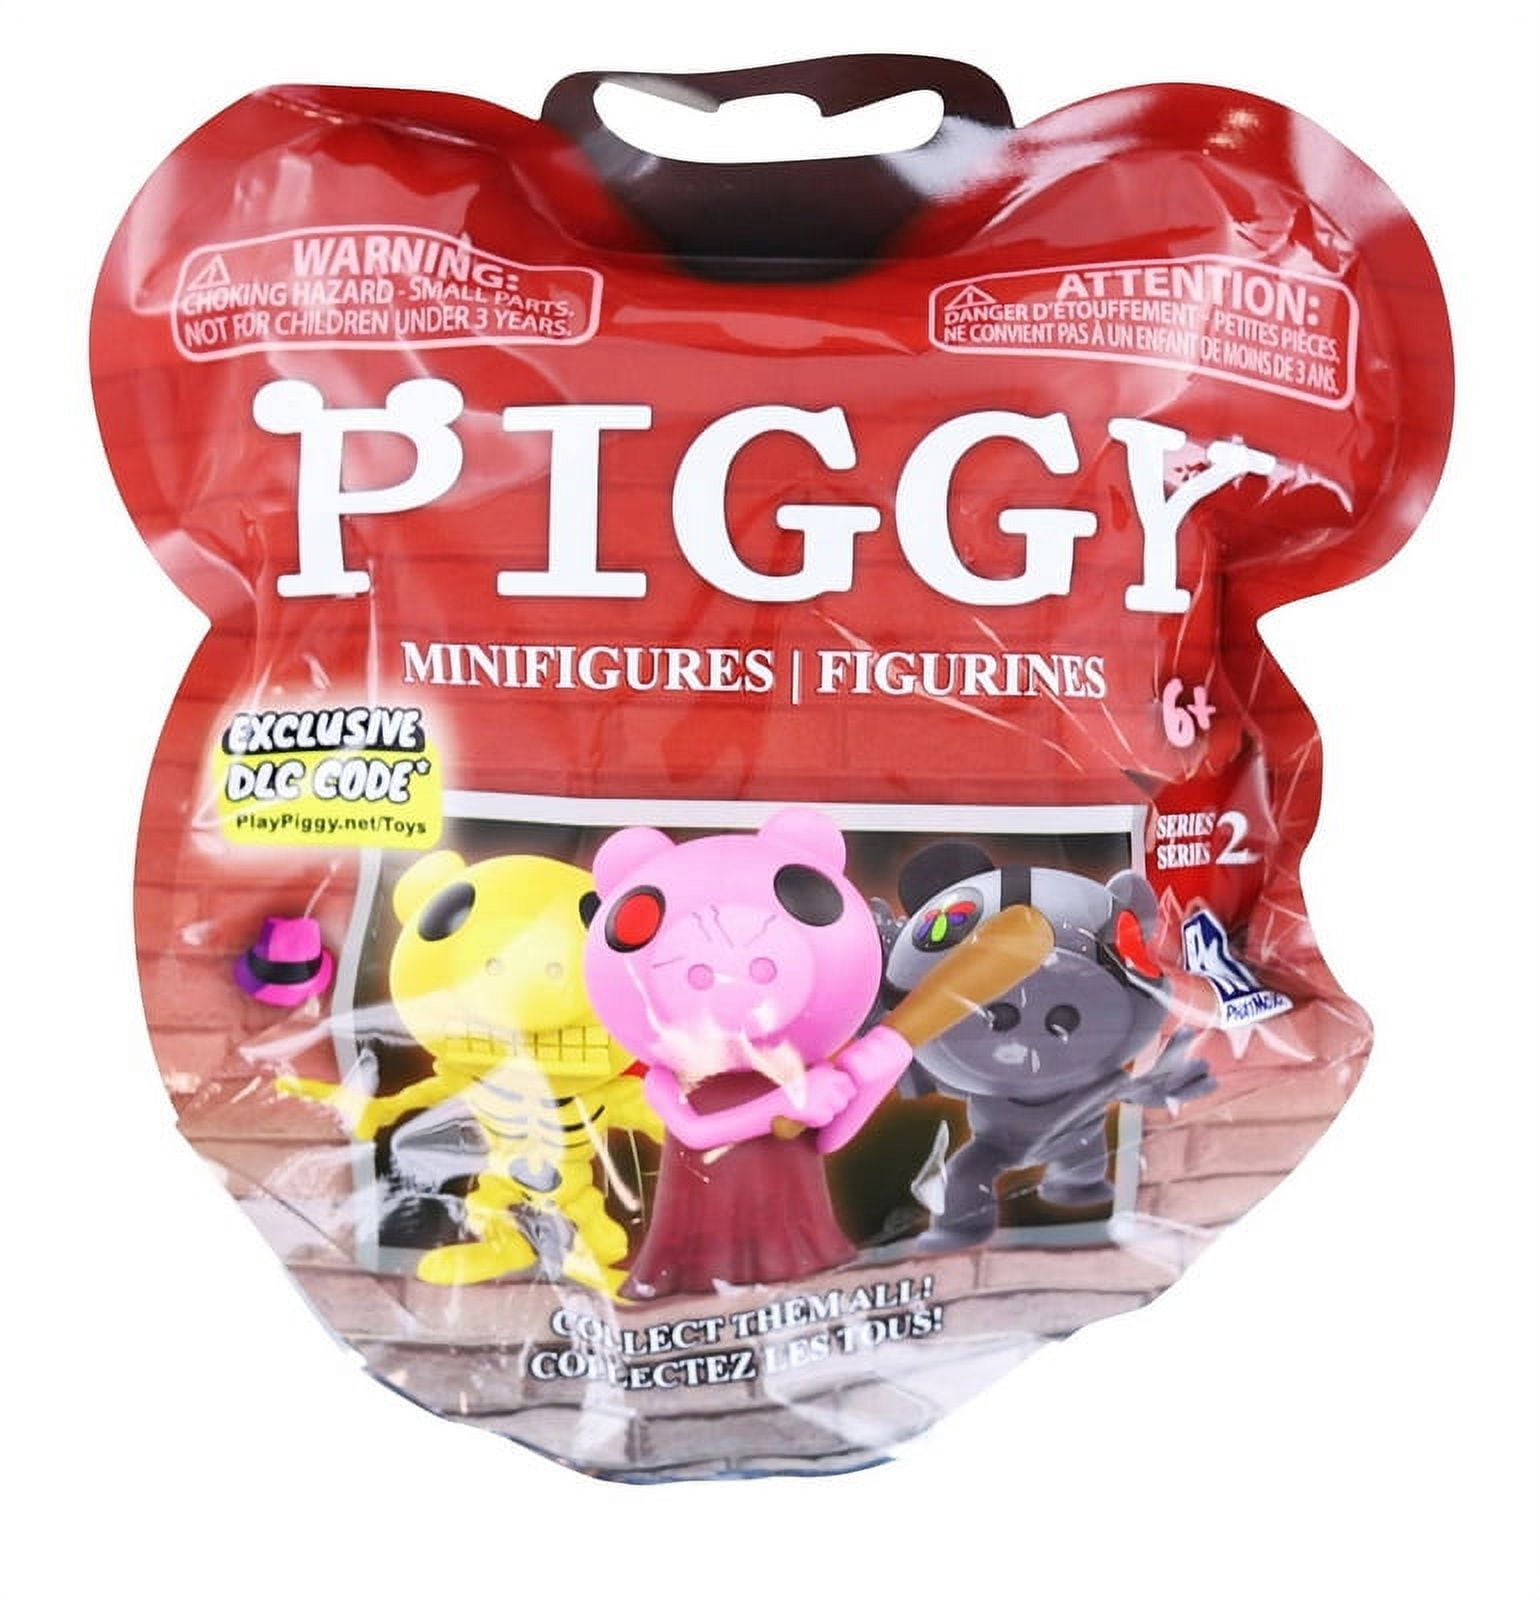  PIGGY - Minifigure Mystery Pack (3” Single Figure